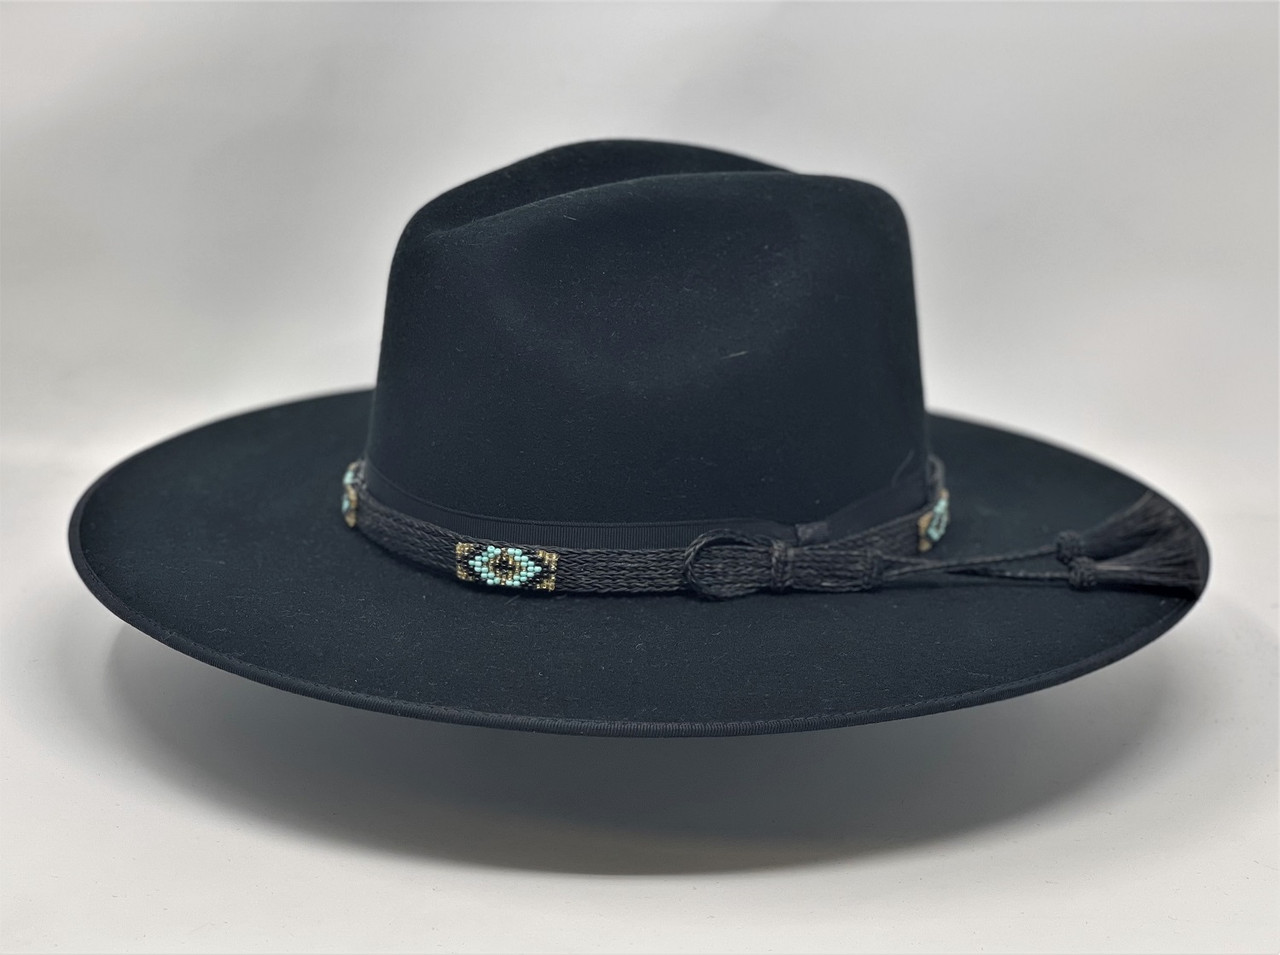 Stetson Helix Black Brim Western Hat - One mini